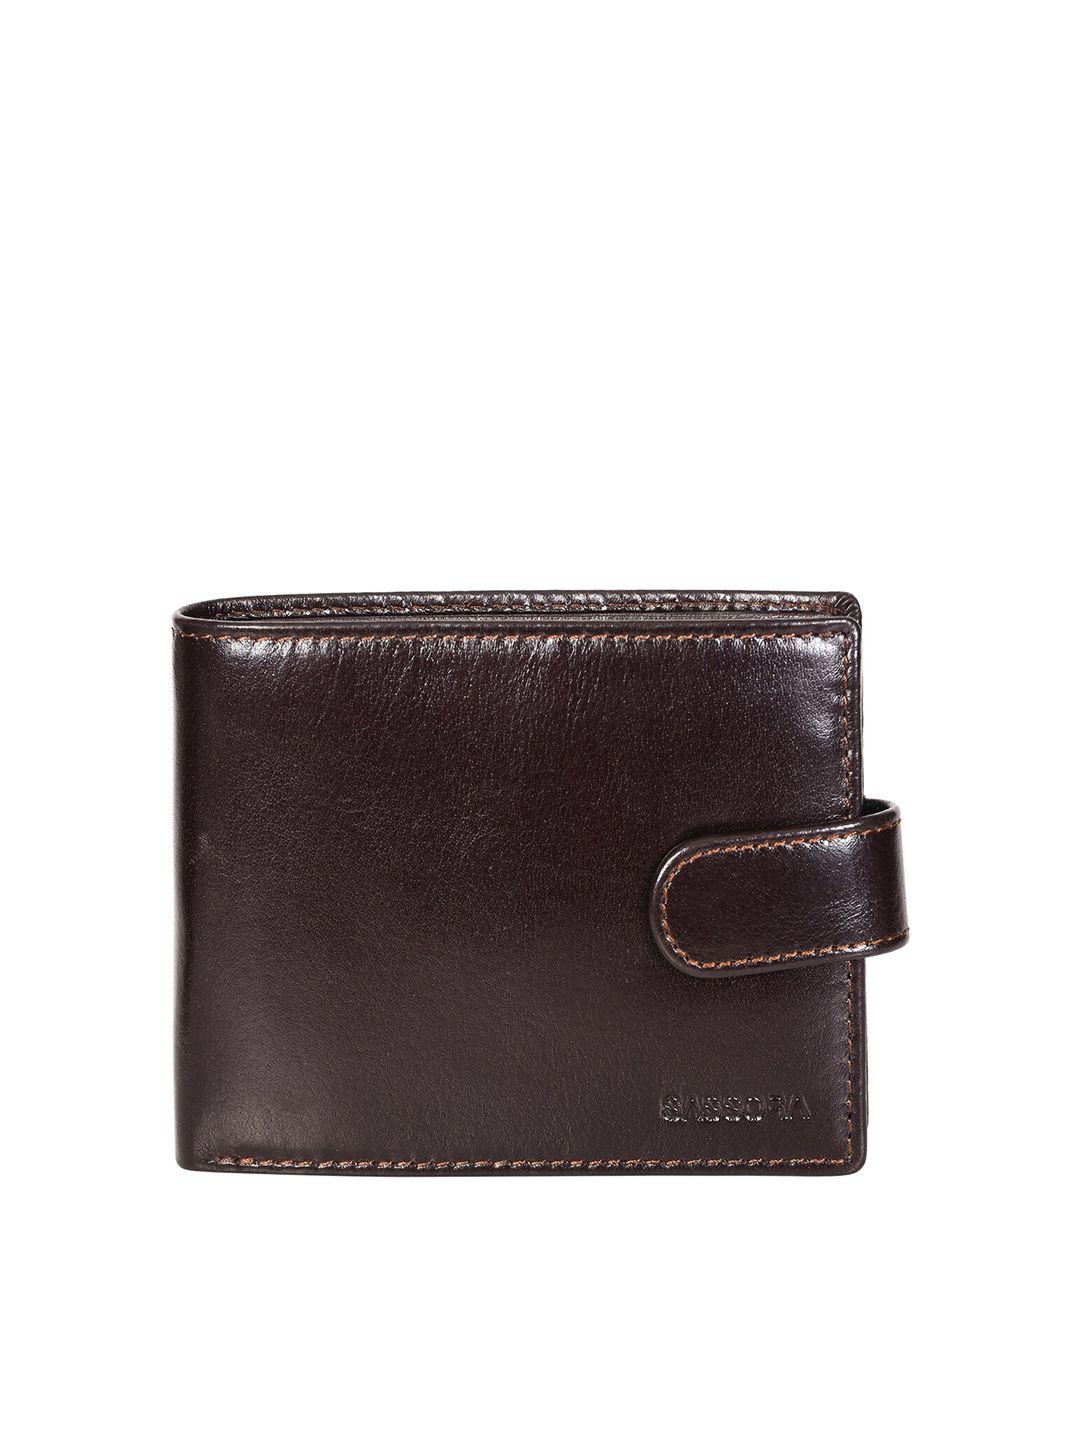 sassora men brown leather two fold wallet